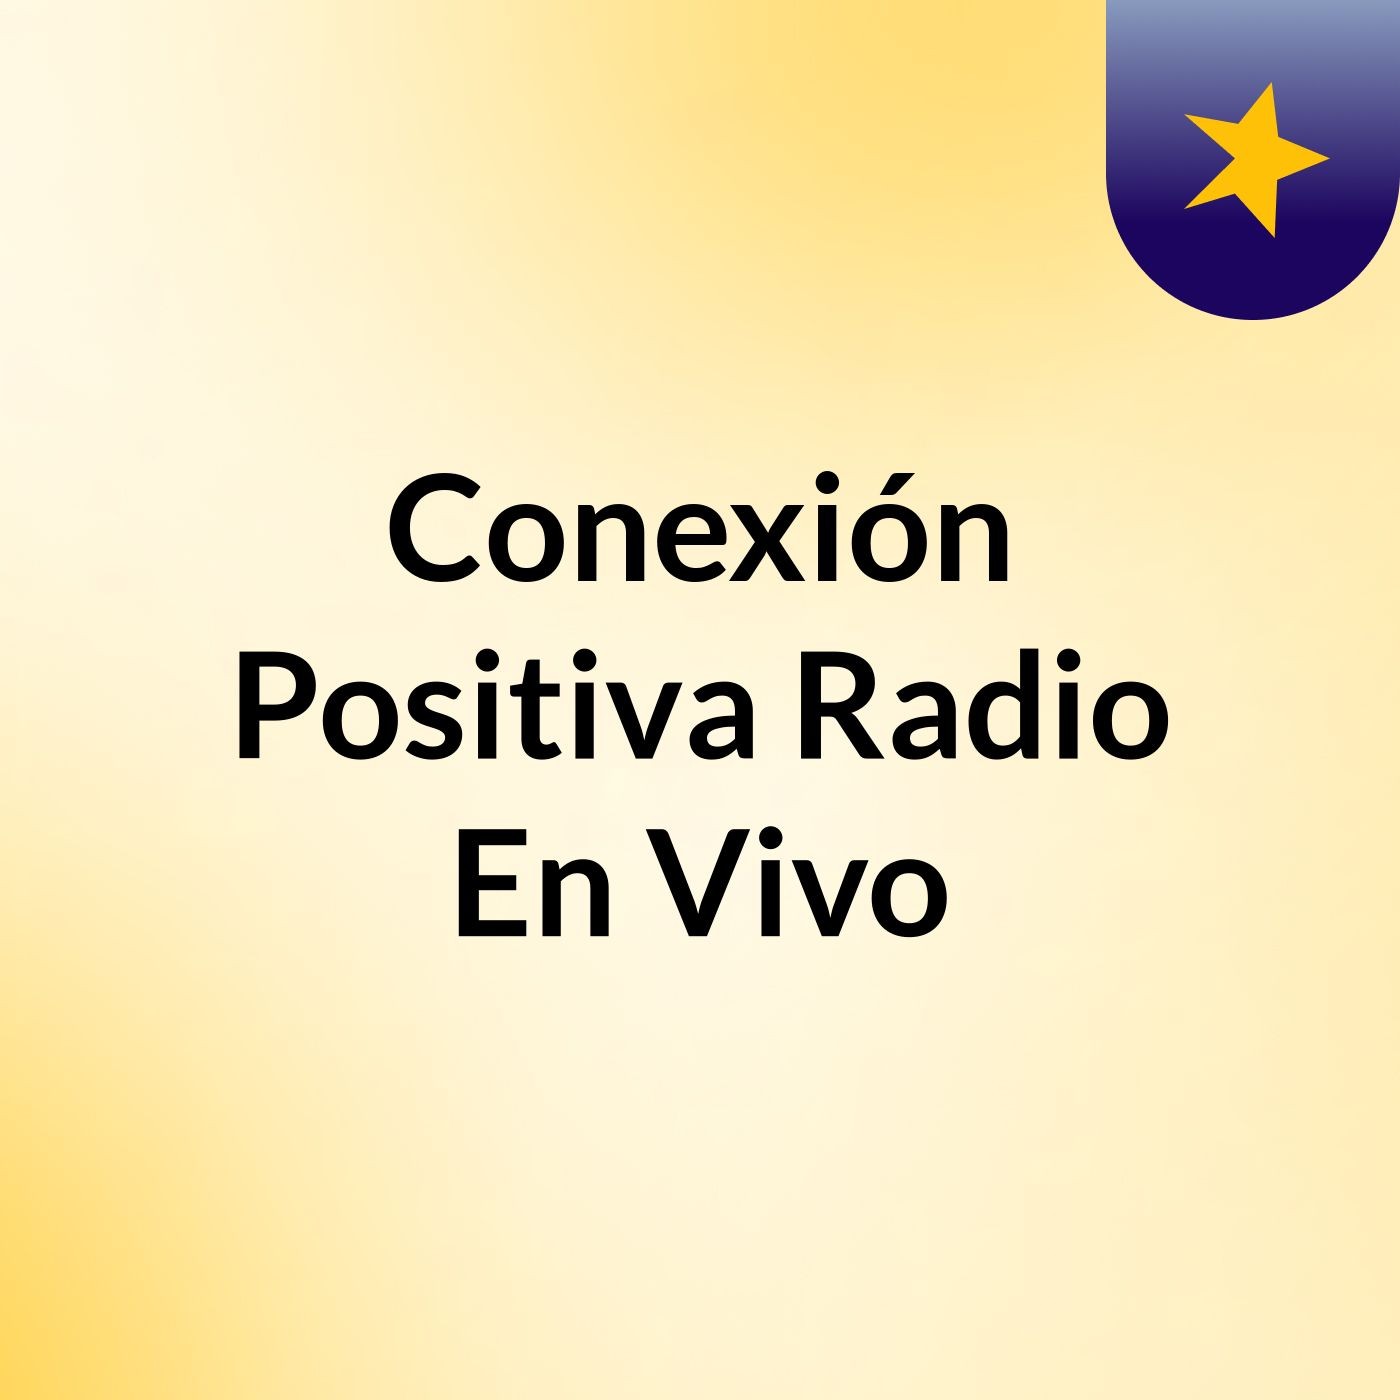 Conexión Positiva Radio En Vivo